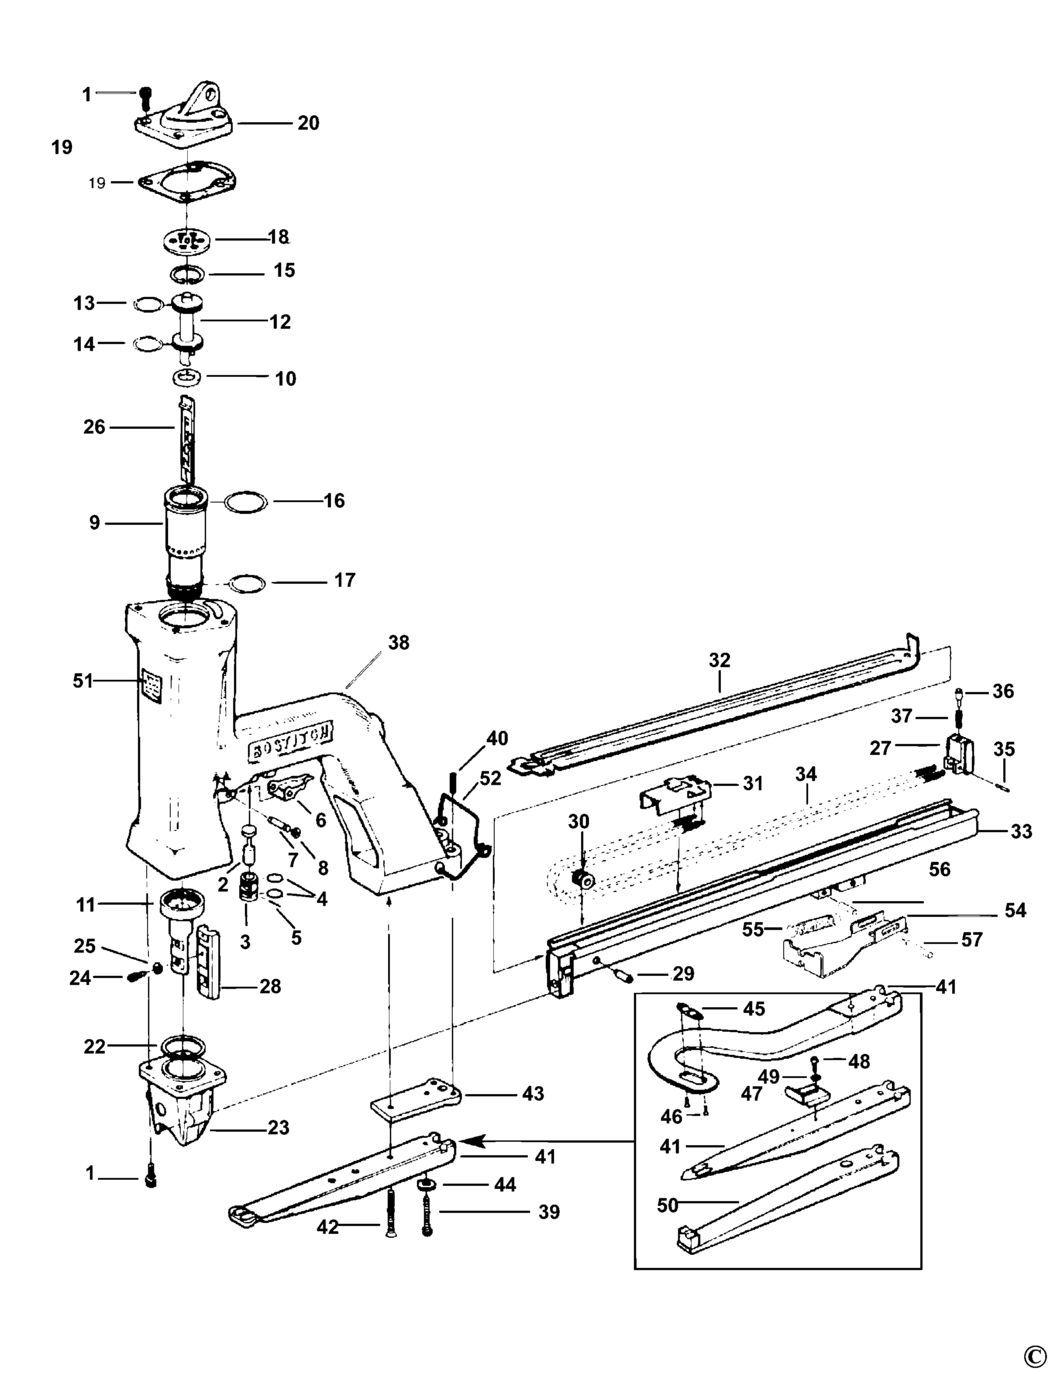 Bostitch P50-5B Type REV 0 Stapler Spare Parts